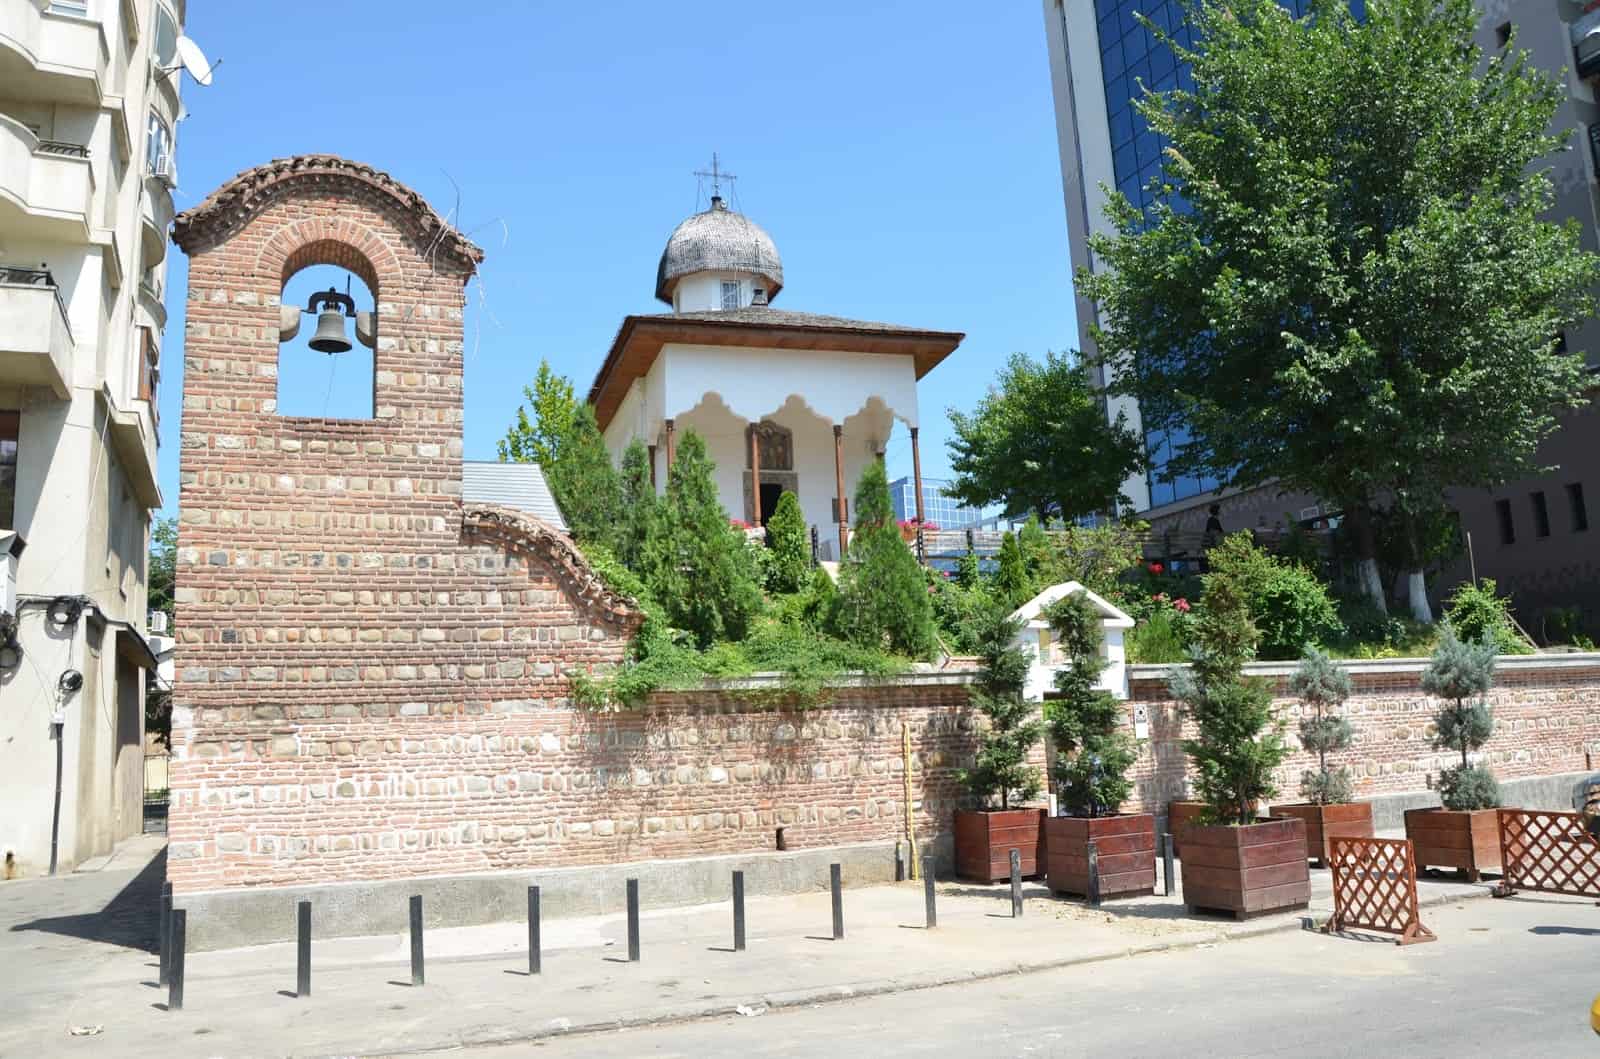 Biserica Bucur Ciobanul in Bucharest, Romania